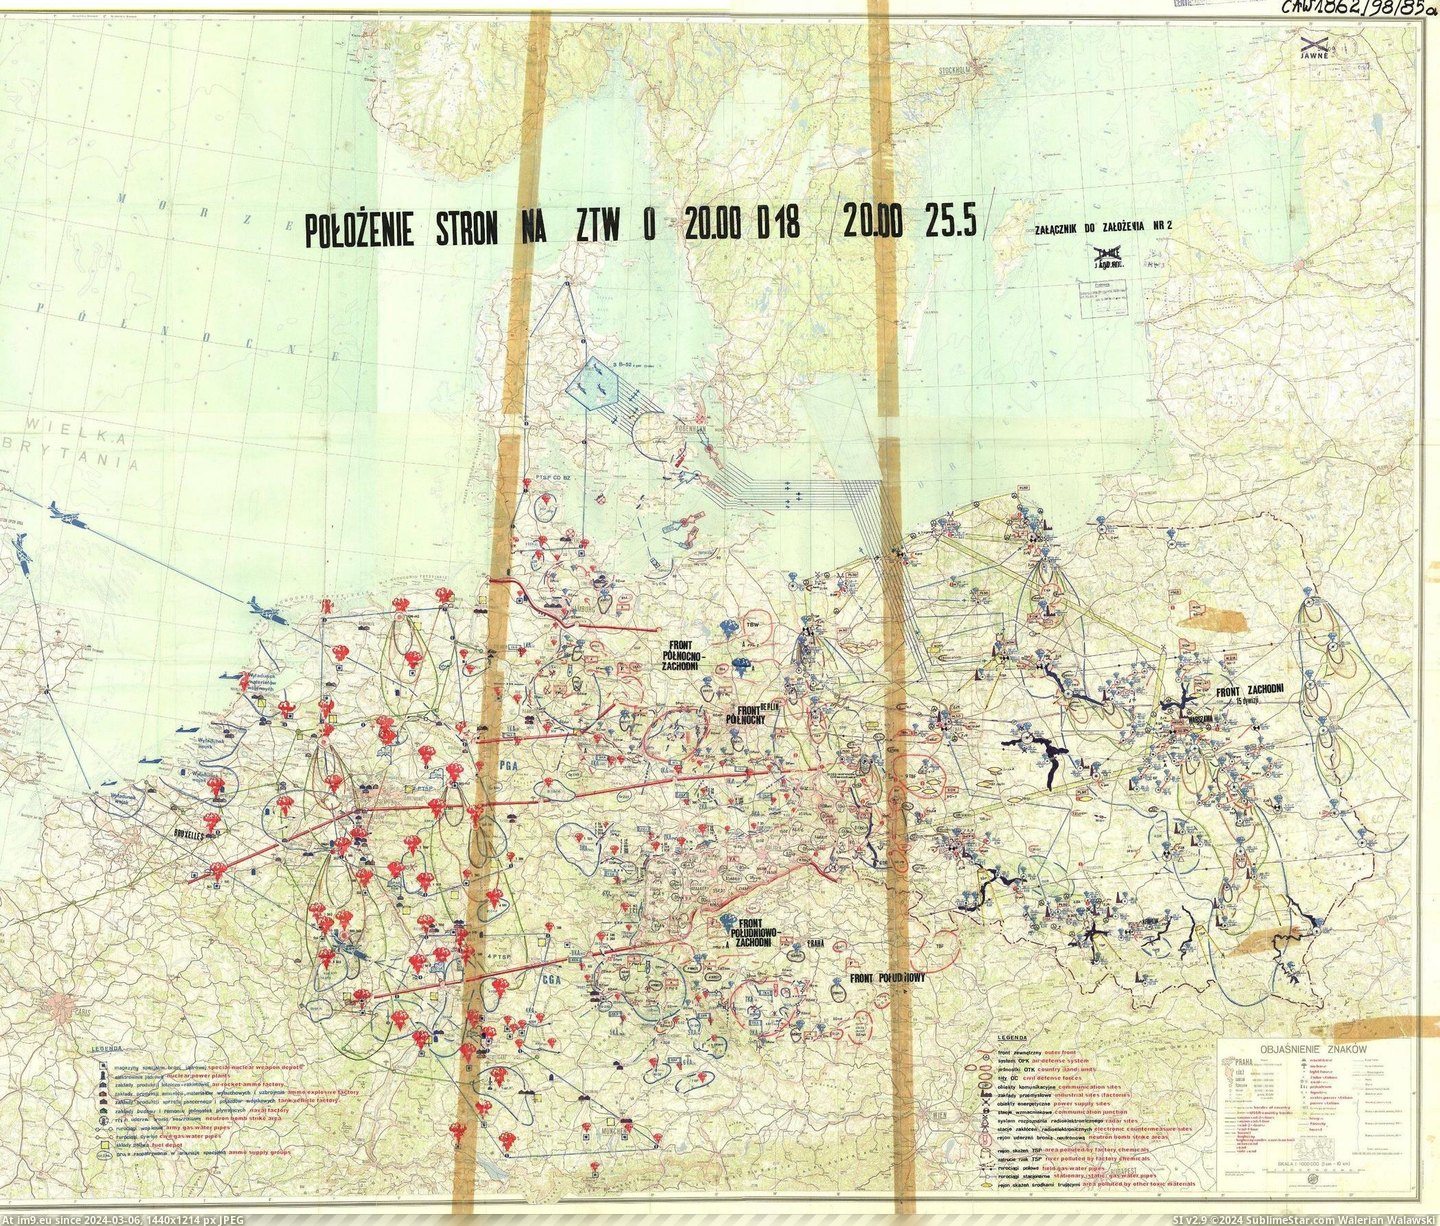 #World #War #Strike #Nuclear #Nato #Iii #Plan [Mapporn] USSR world war III nuclear strike plan on NATO [2100x1783] Pic. (Изображение из альбом My r/MAPS favs))